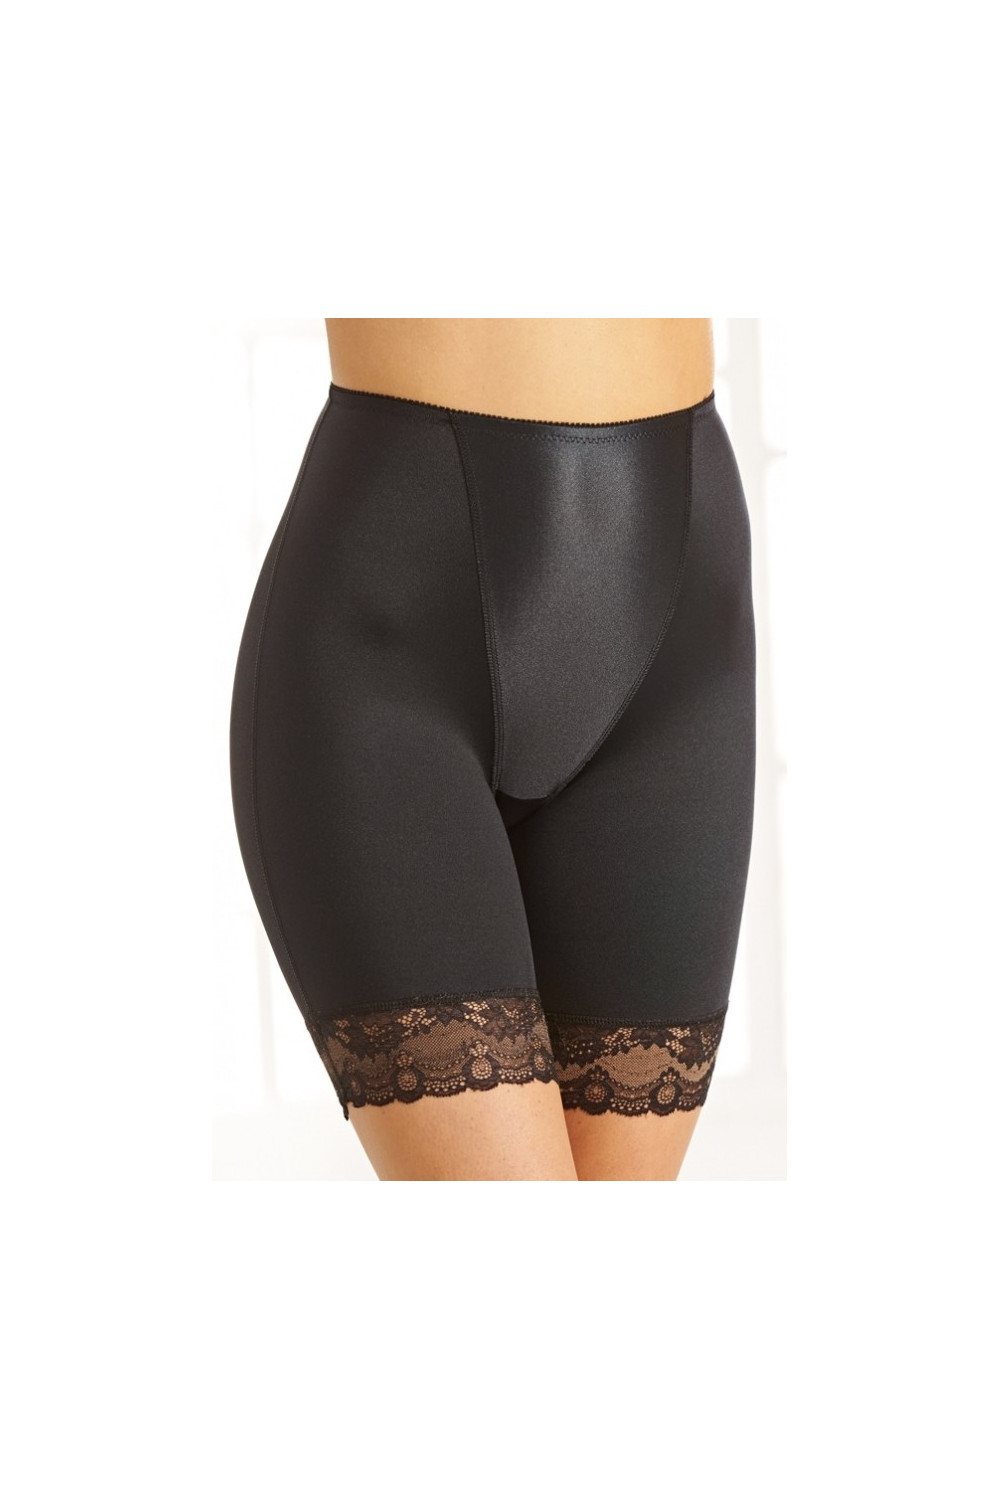 High waist panty girdle made of soft, elastic fabric